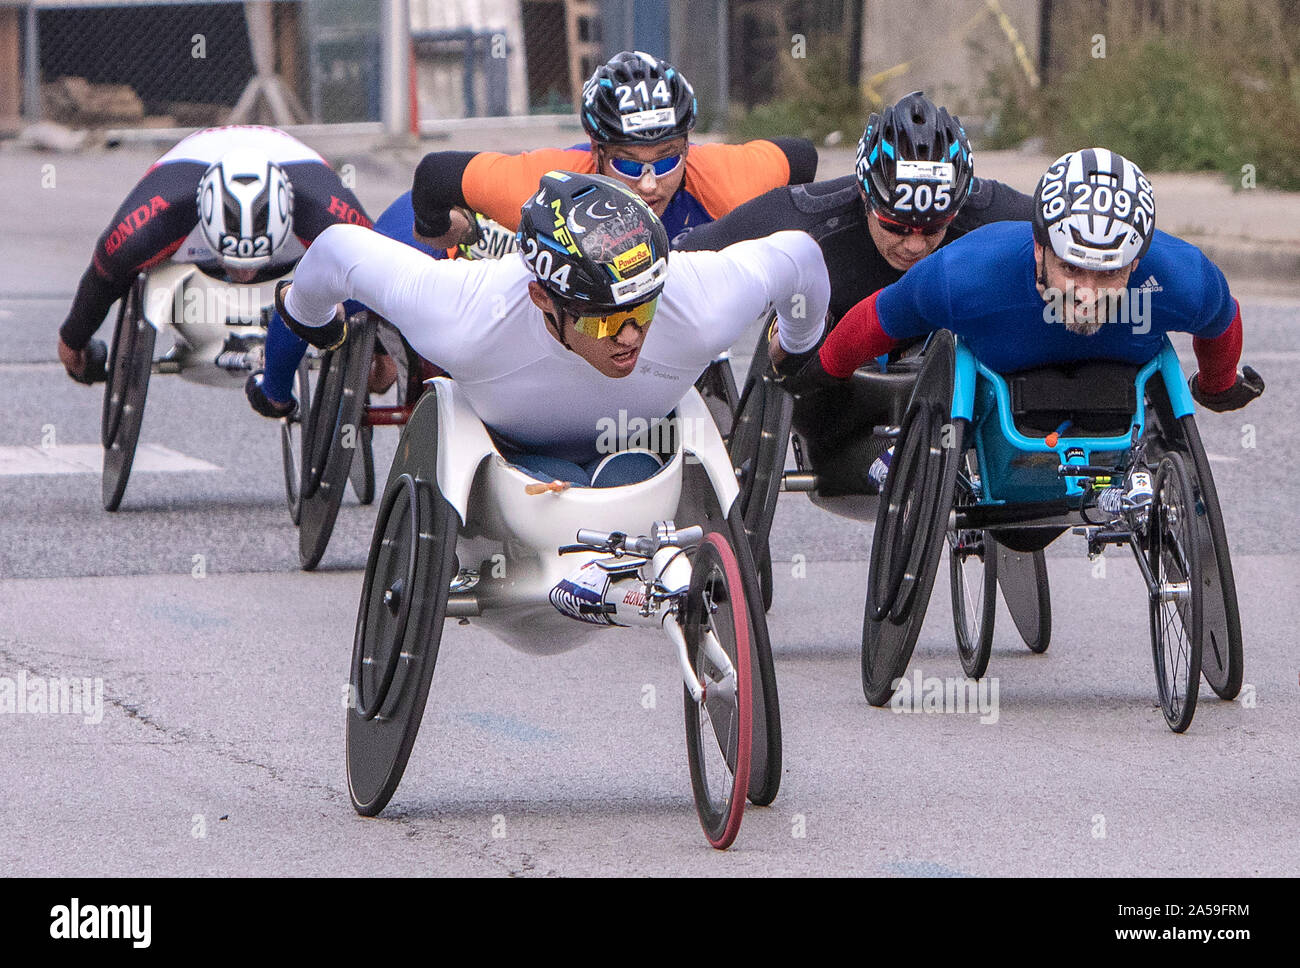 Japanese Paralympians Nishida Hiroki #204, Kota Hokinoue, #205, Aaron Pike USA #206, Jorge Madera #209 from Spain,  race towards the finish line. The Stock Photo